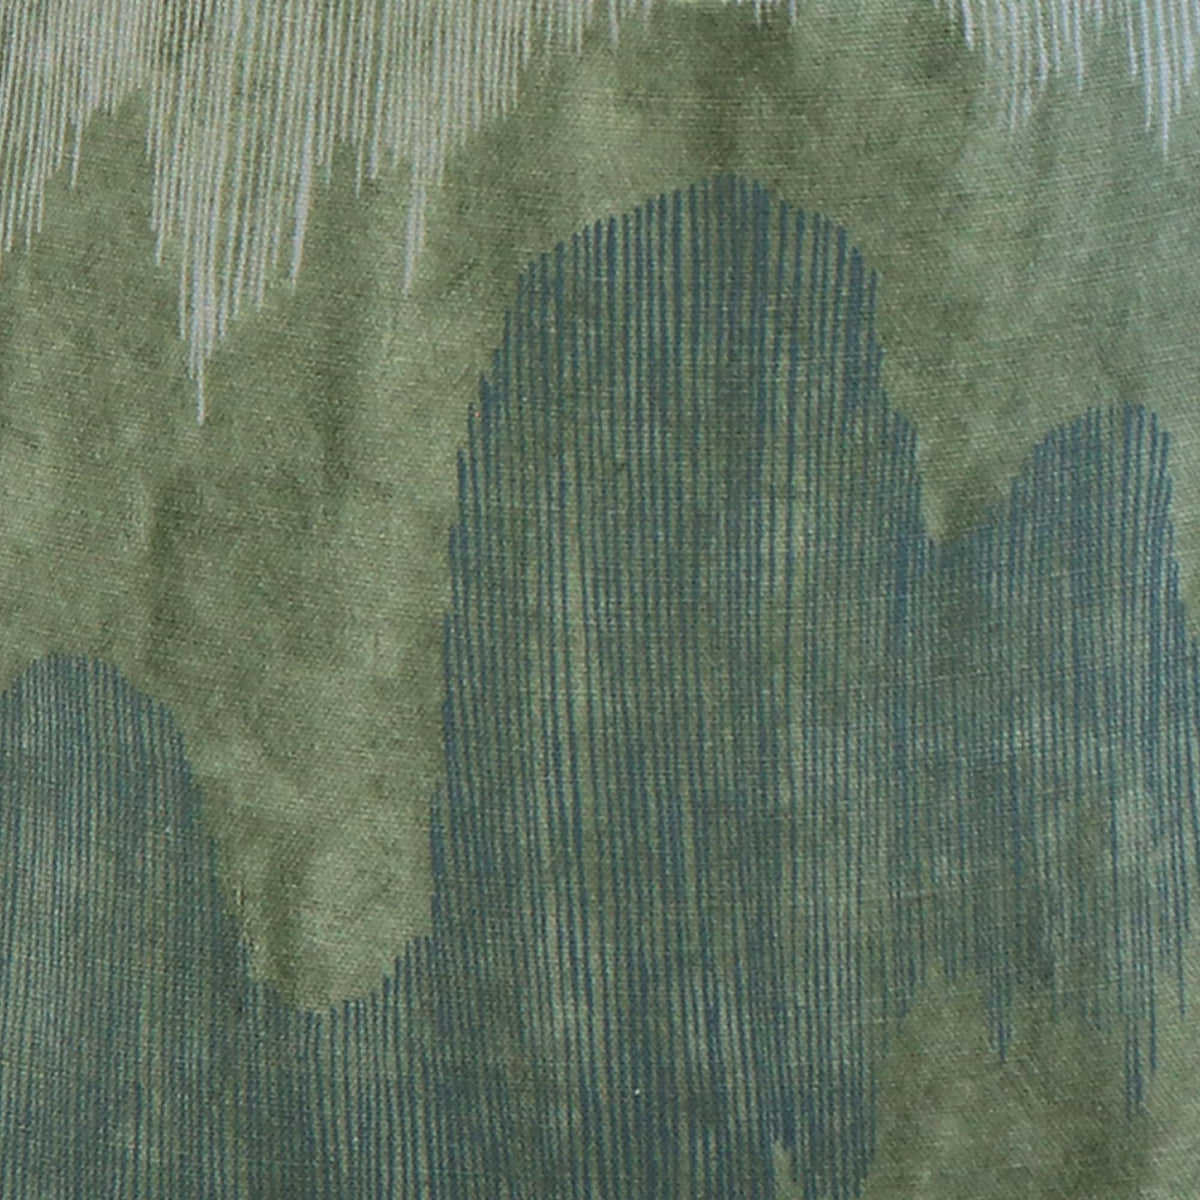 Cascadia Jadestone / 4x4 inch Fabric Swatch